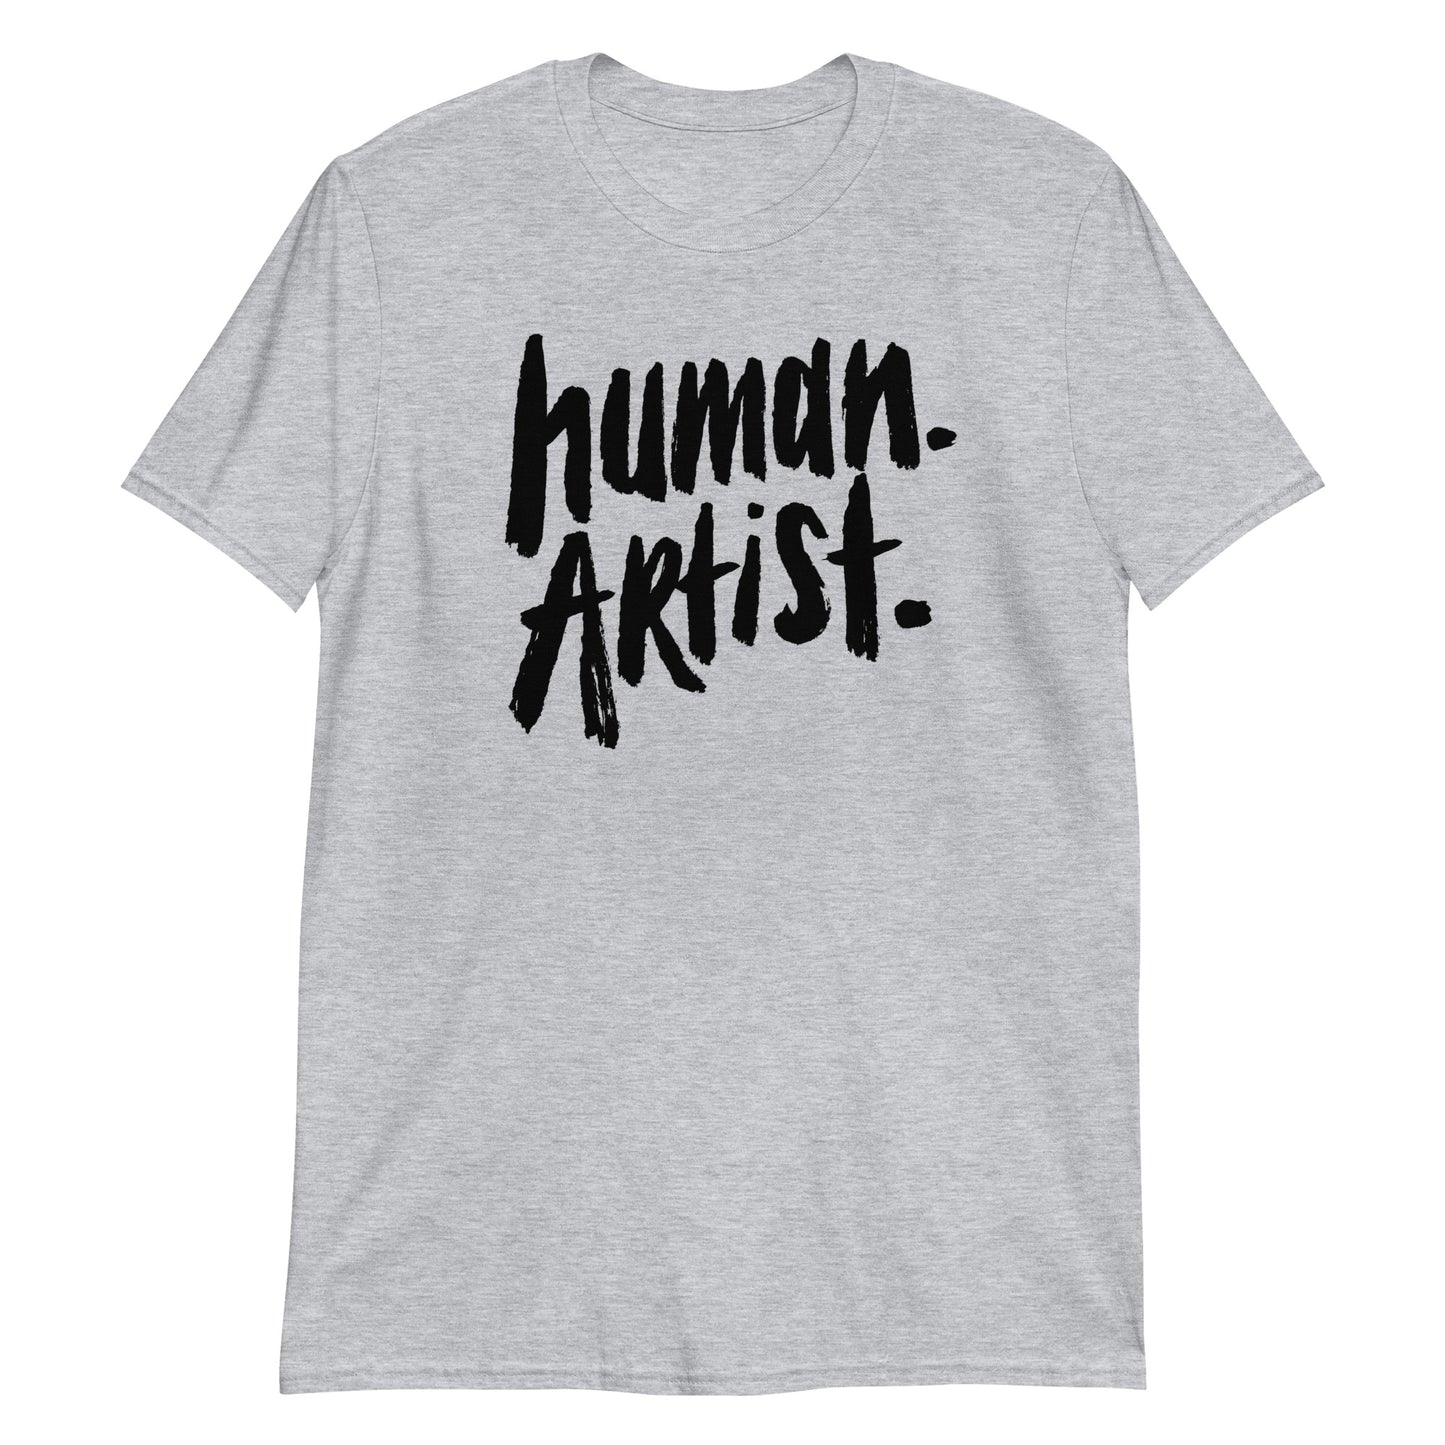 human. Artist. (on white or grey) T-Shirt